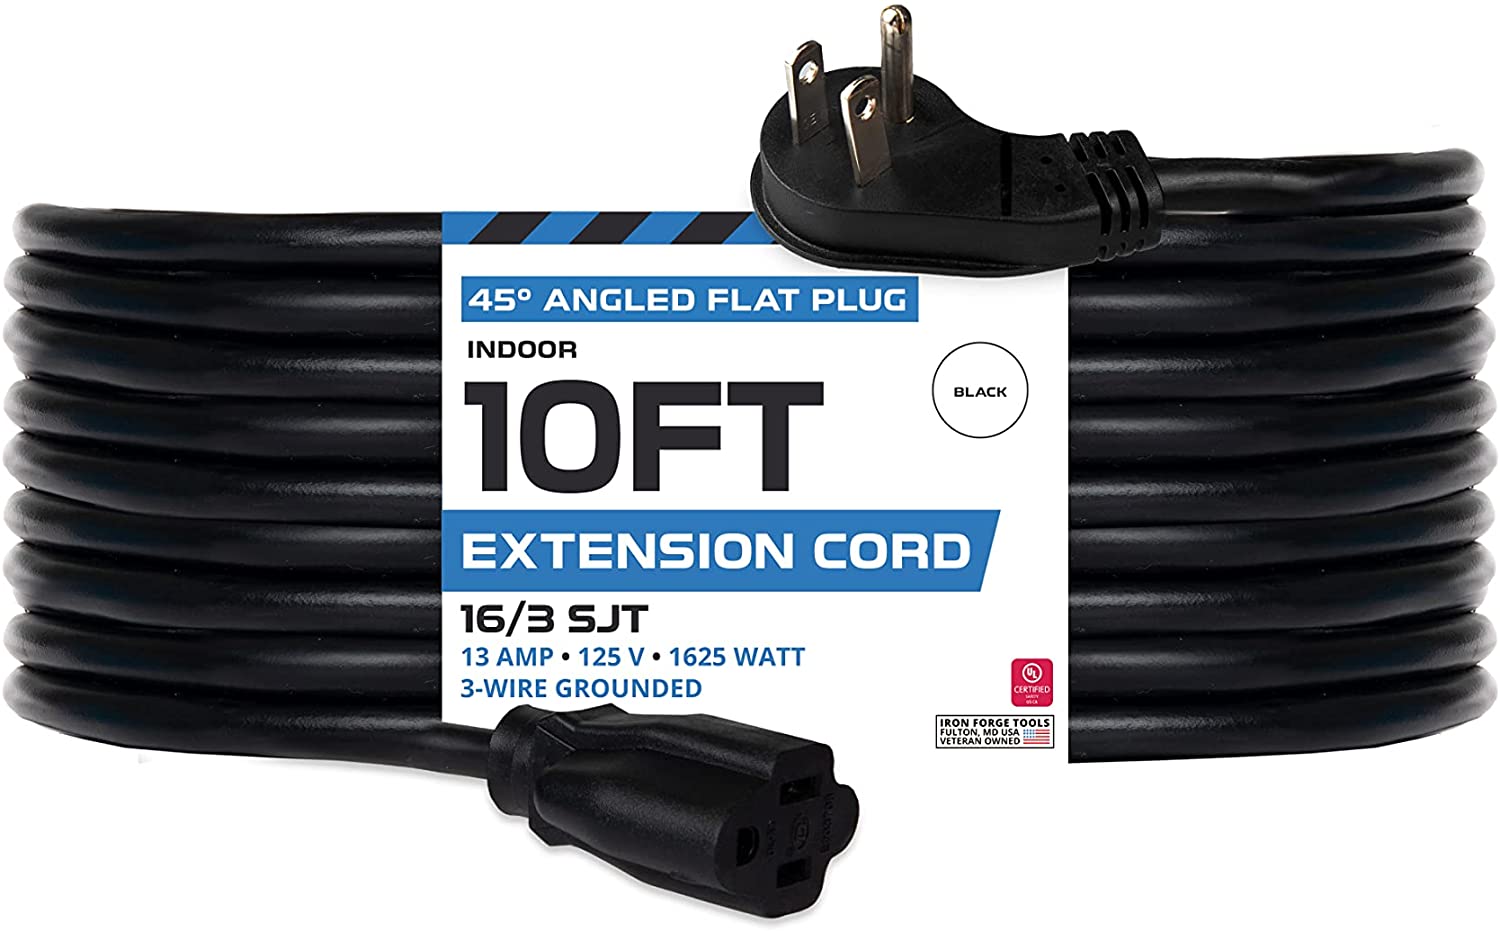 10 Ft Indoor Extension Cord - 45° Angled Flat Plug- Black